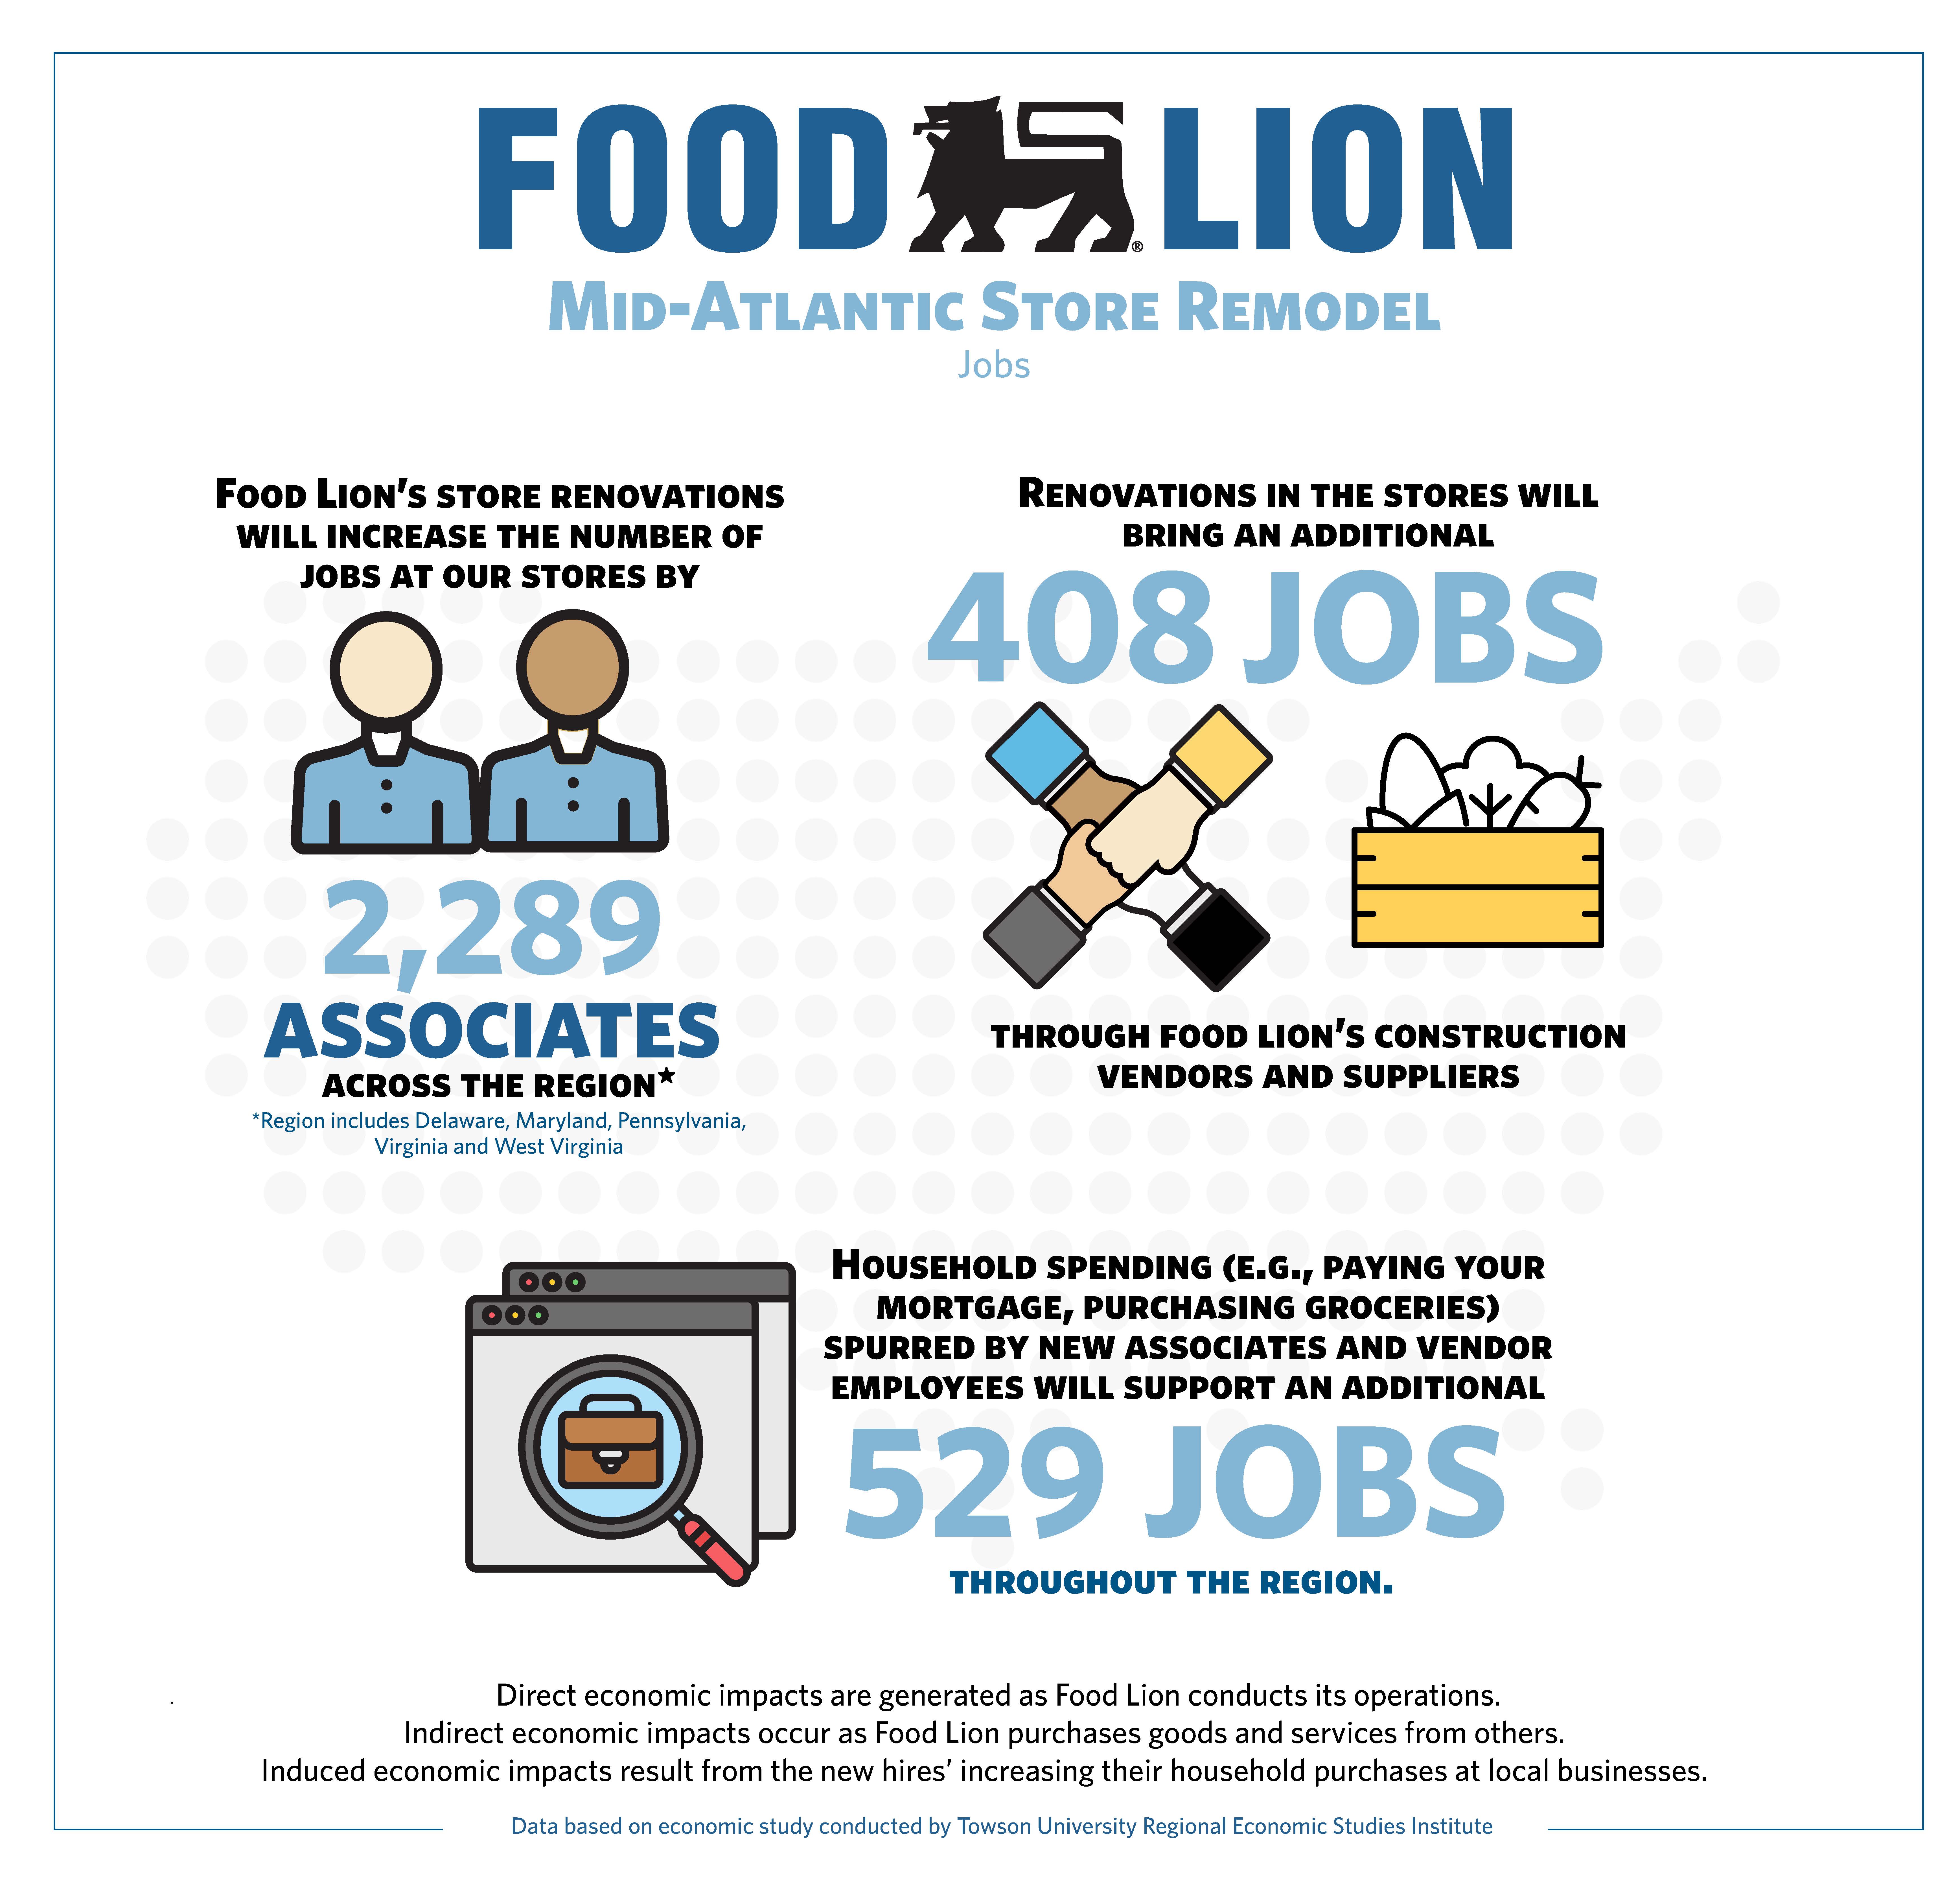 Food Lion Hires Nearly 2,300 New Associates, Generates $360 Million in Economic Impact in Mid-Atlantic Region